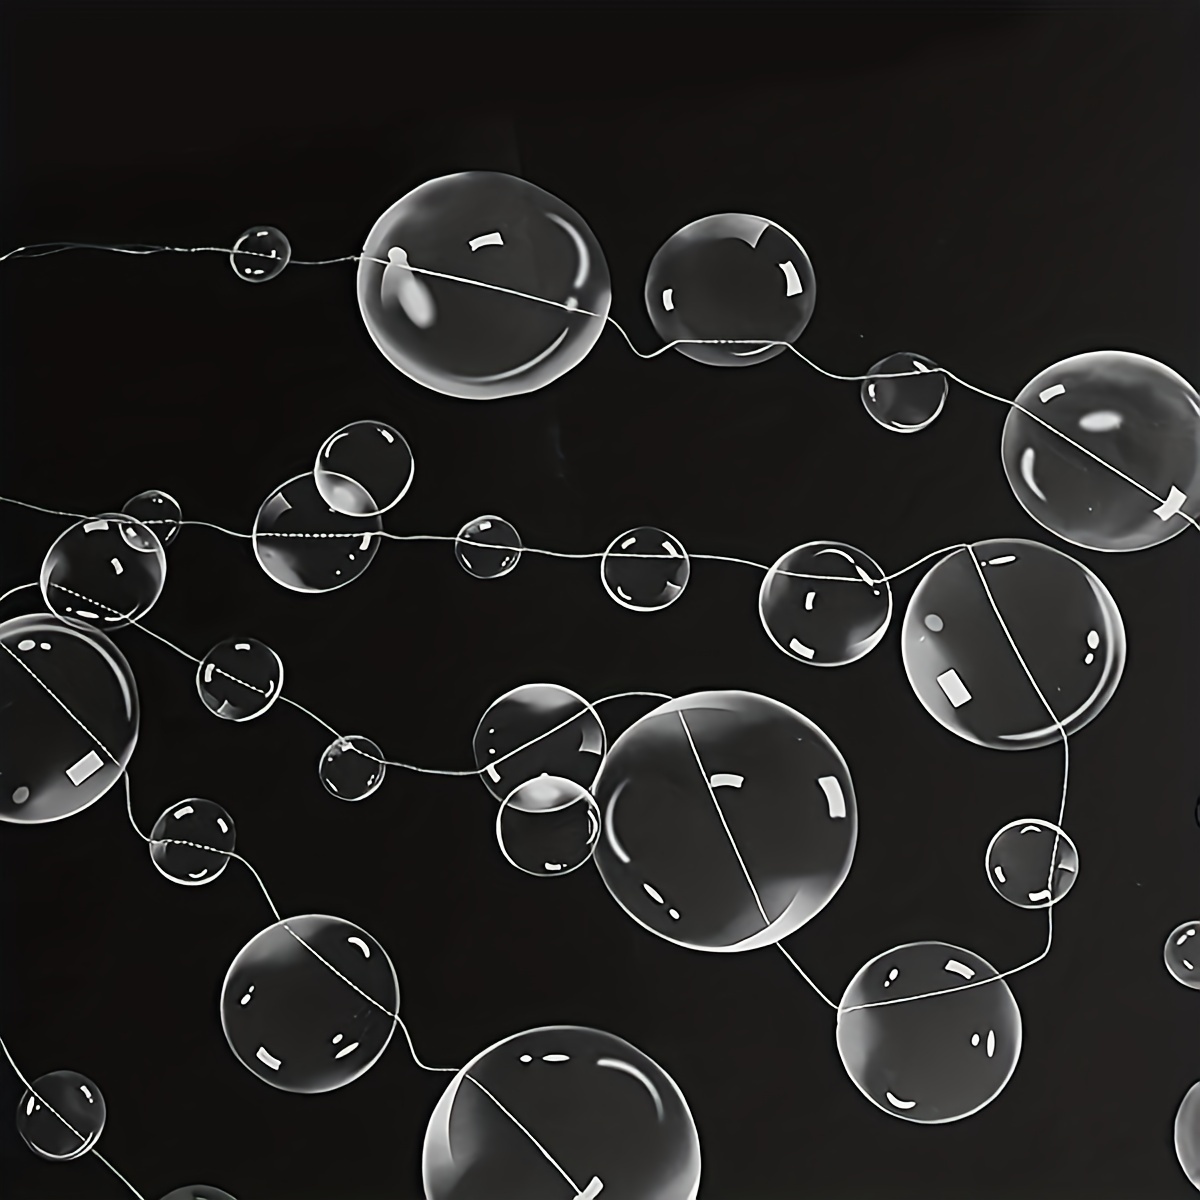 2Pcs Mermaid Bubble Garland Transparent Hanging Bubbles Hanging